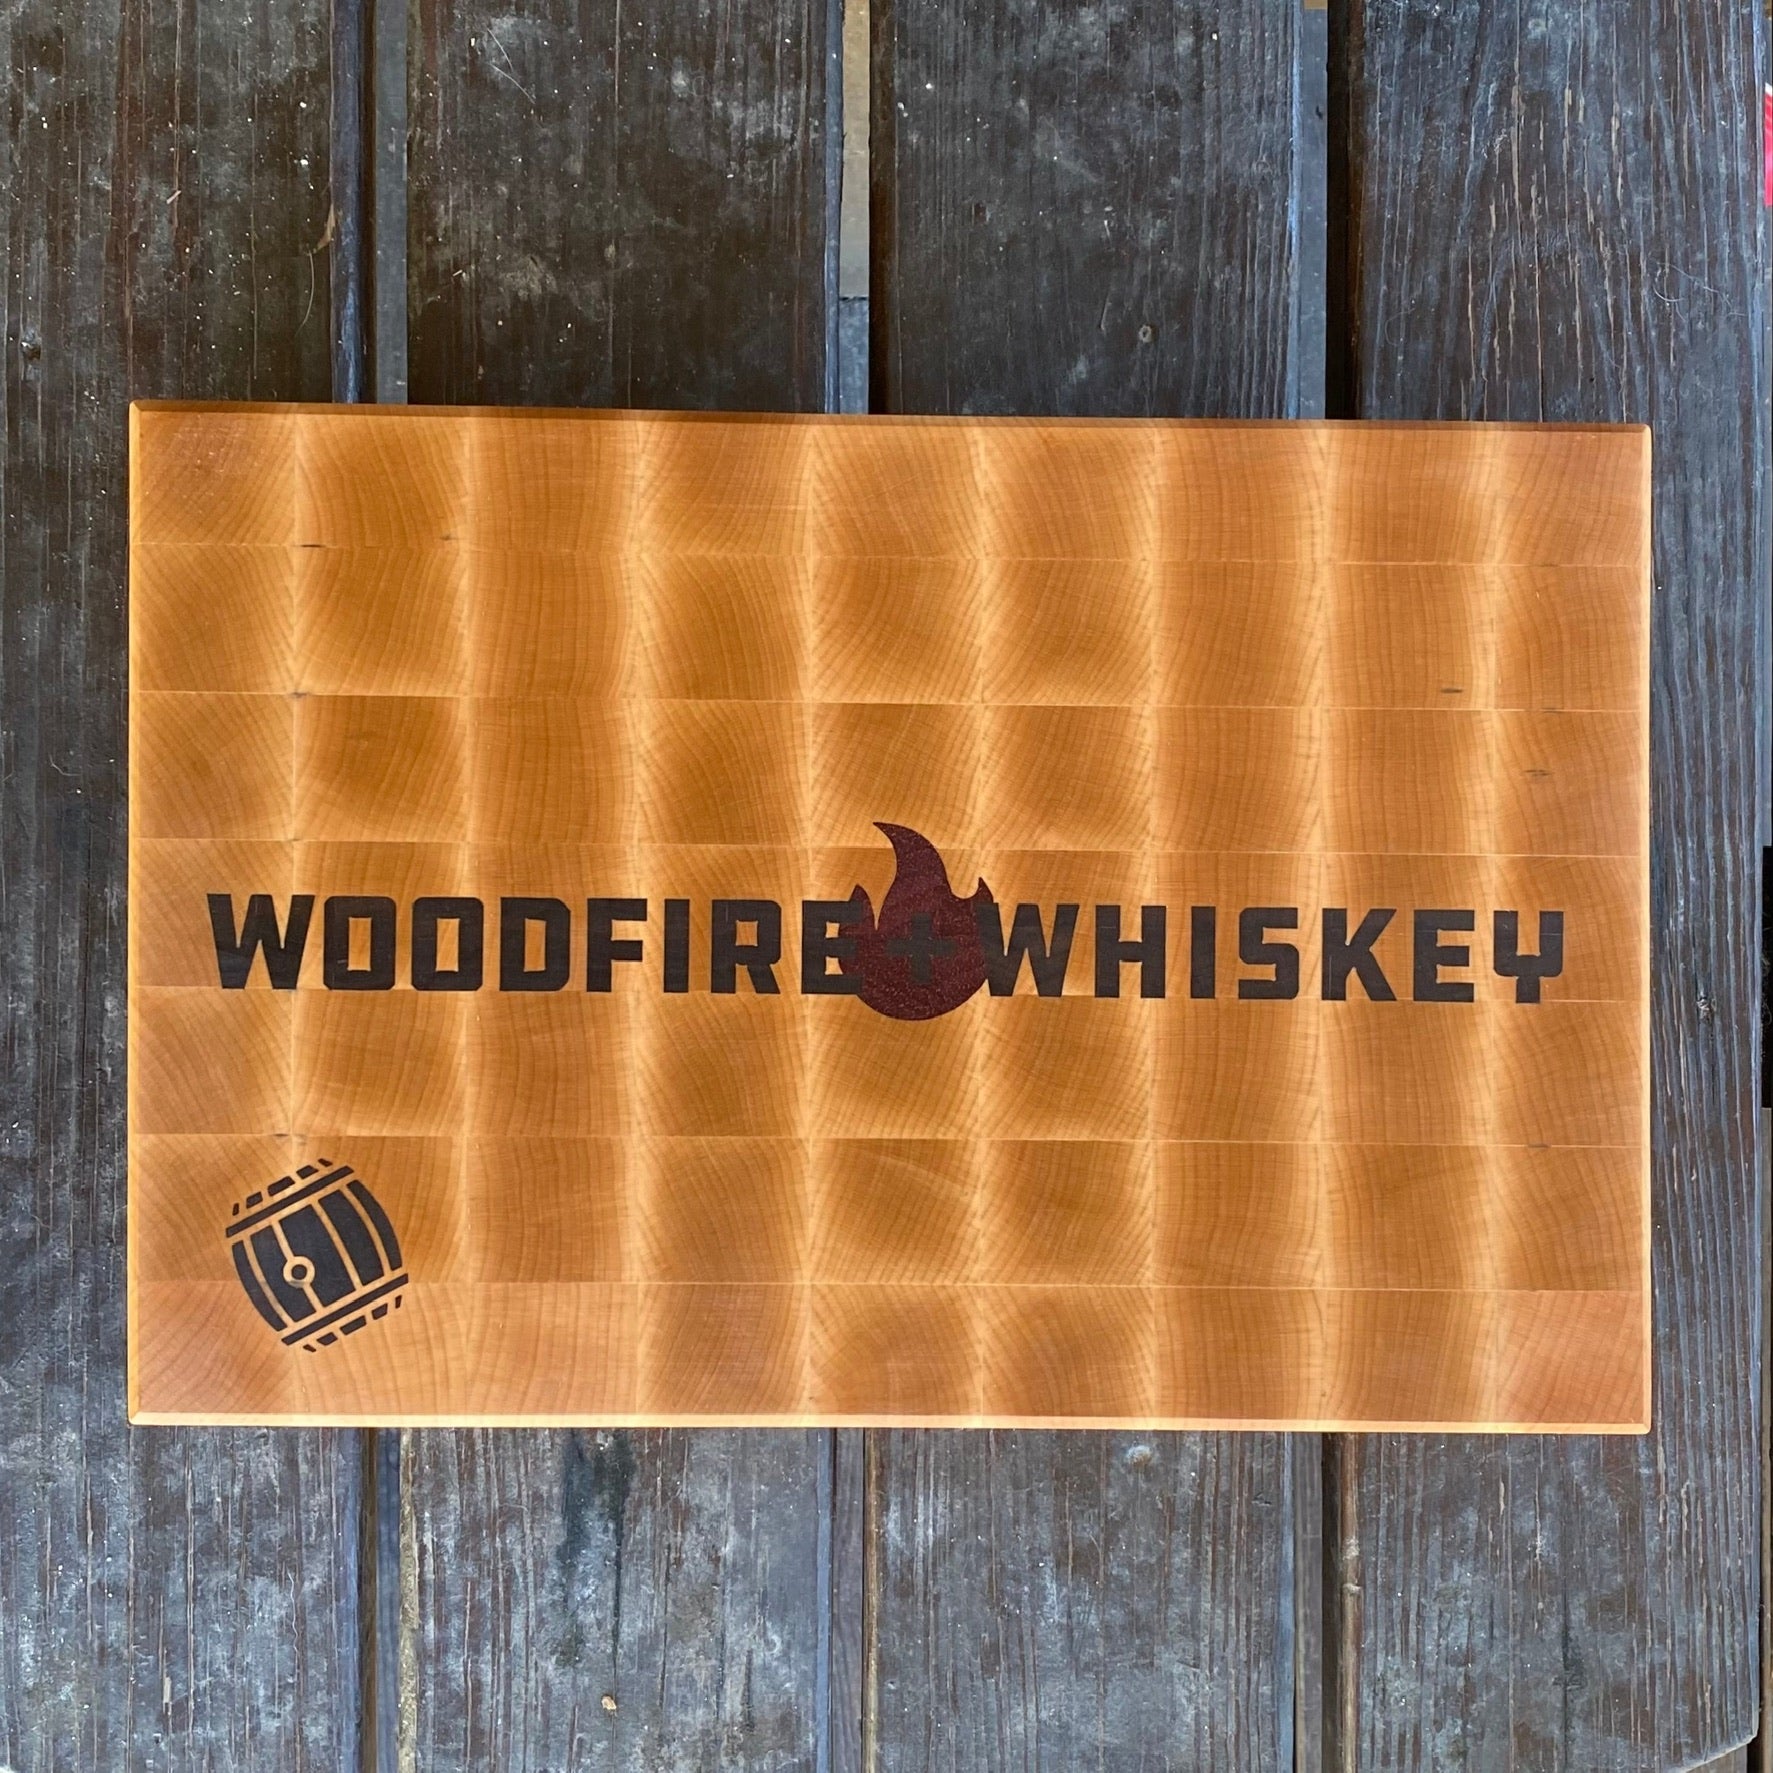 Woodfire + Whiskey: The Original, RYE